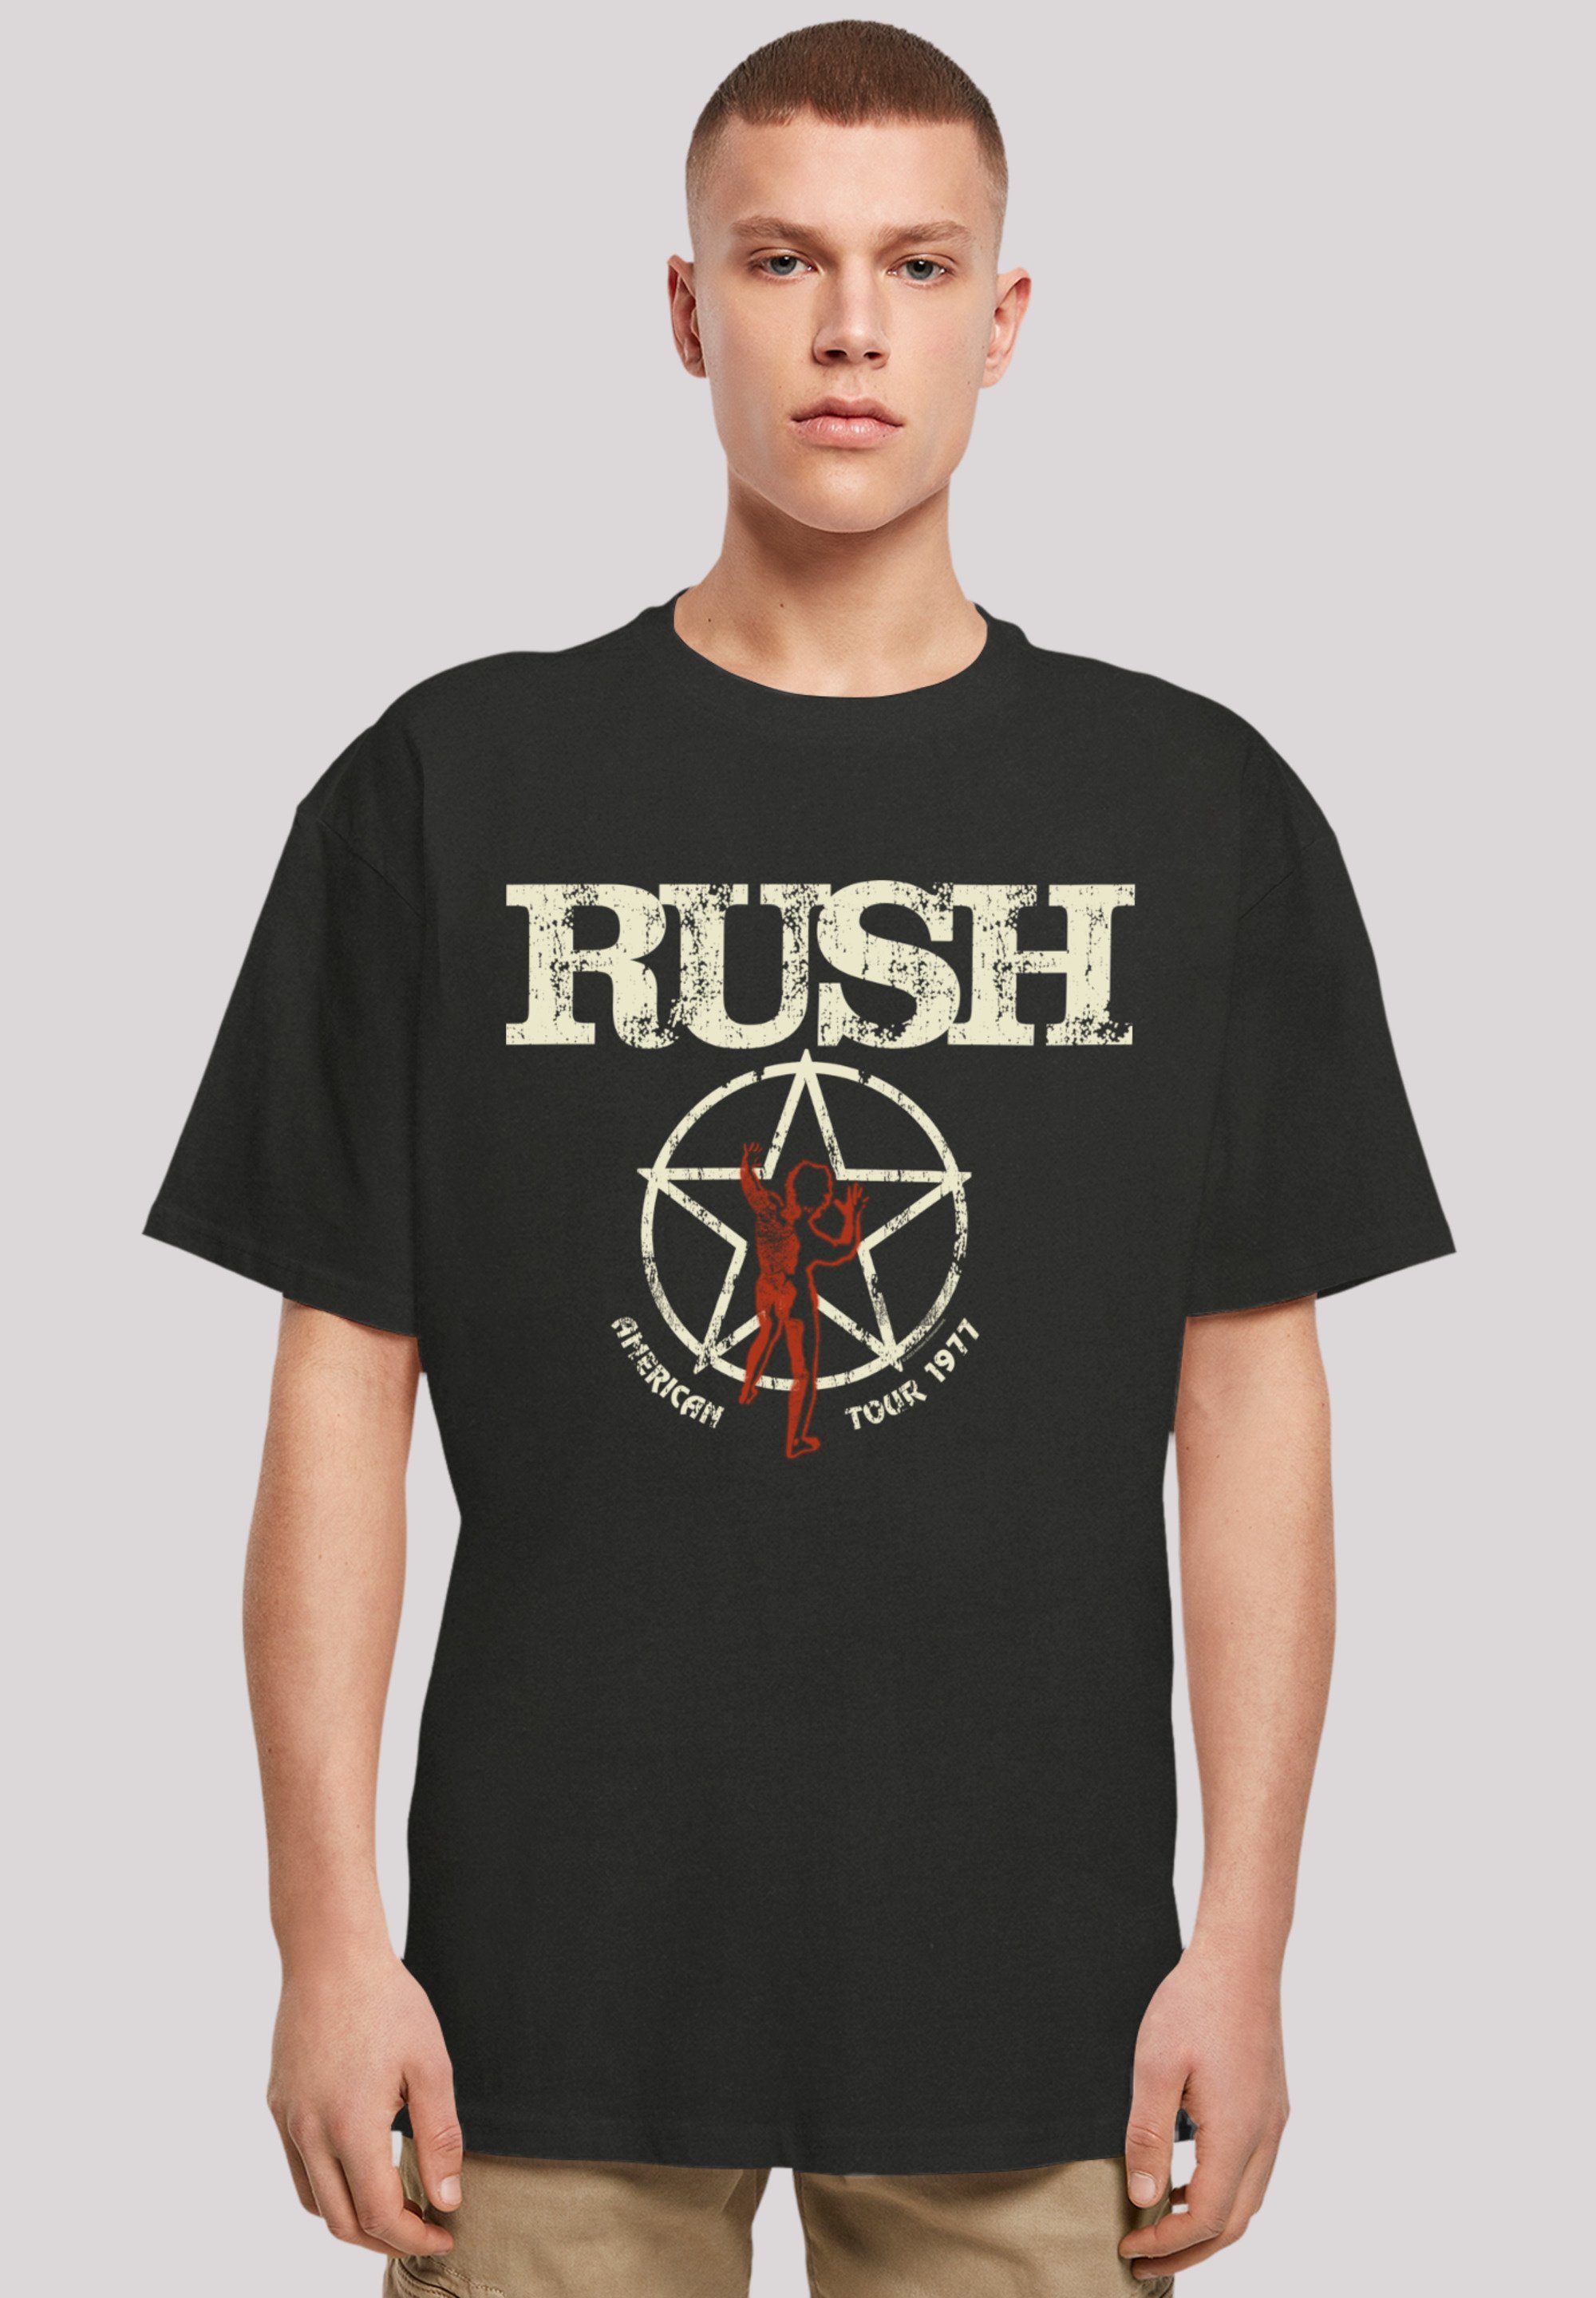 F4NT4STIC T-Shirt Rush Rock Band American Tour 1977 Premium Qualität schwarz